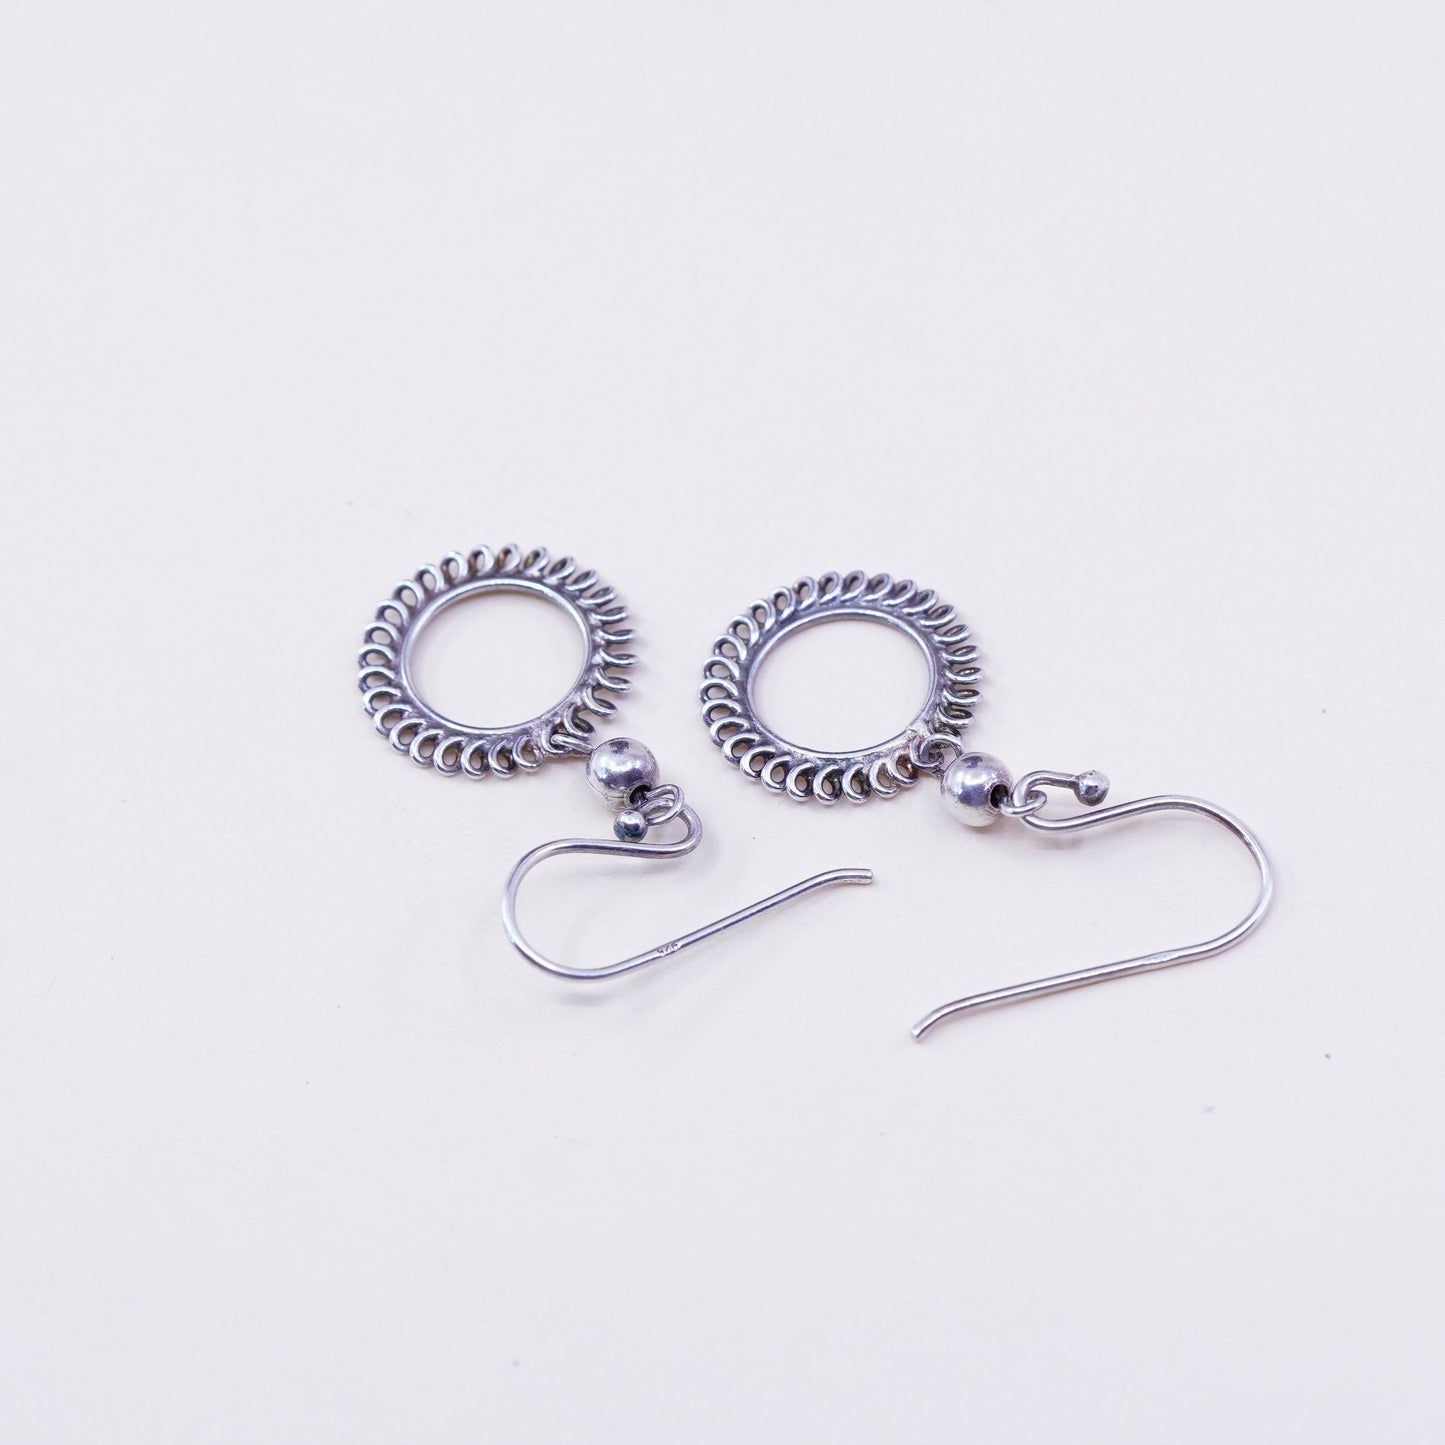 Vintage sterling silver handmade earrings, 925 textured circles dangle